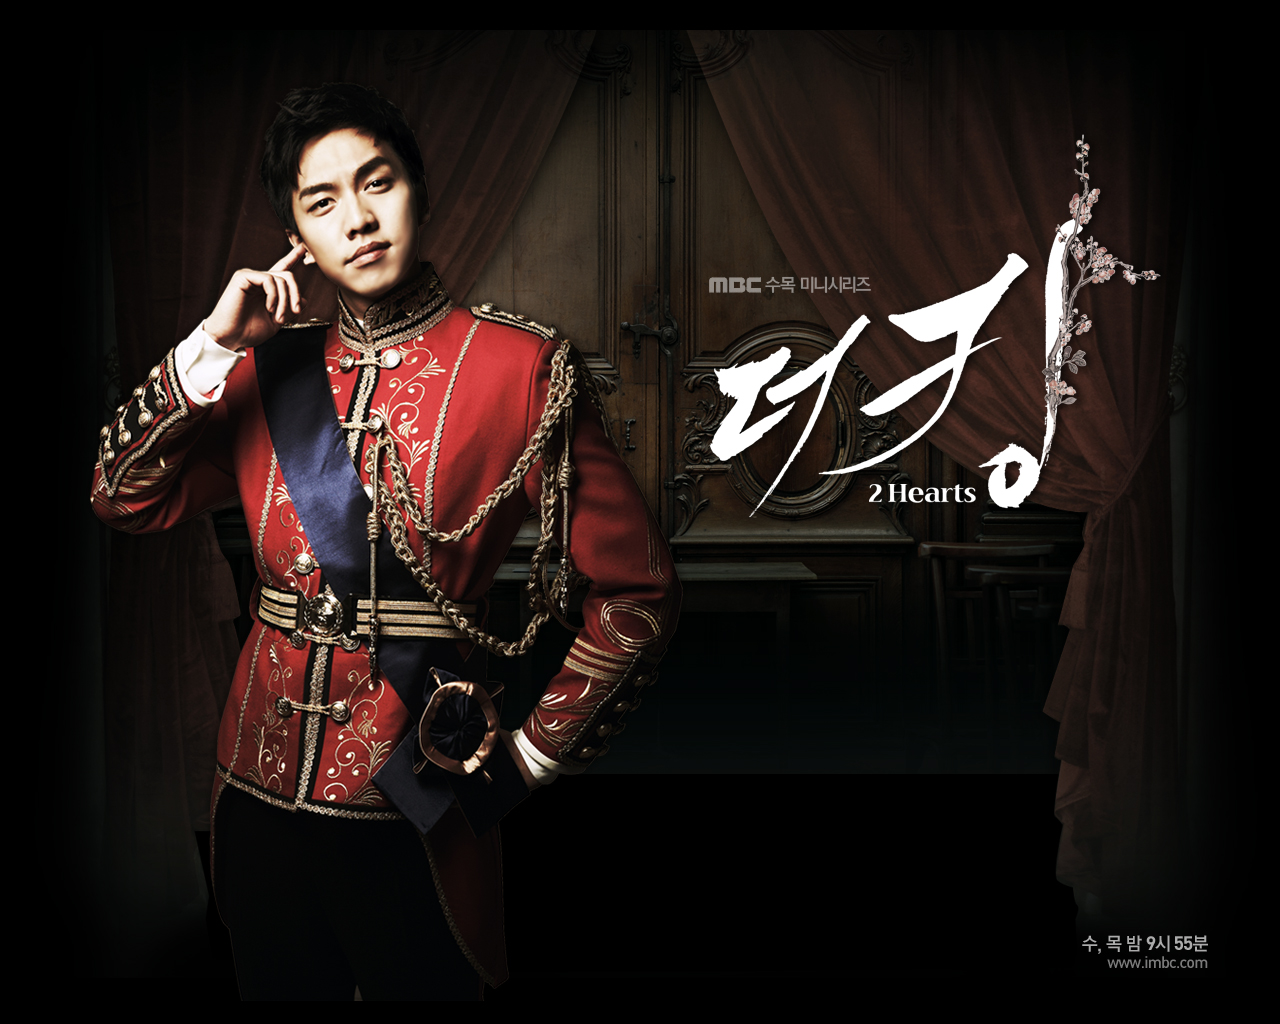 Король драмы дорама. Королевство двух сердец дорама. Король 2х сердец дорама. Lee Seung gi дорама.